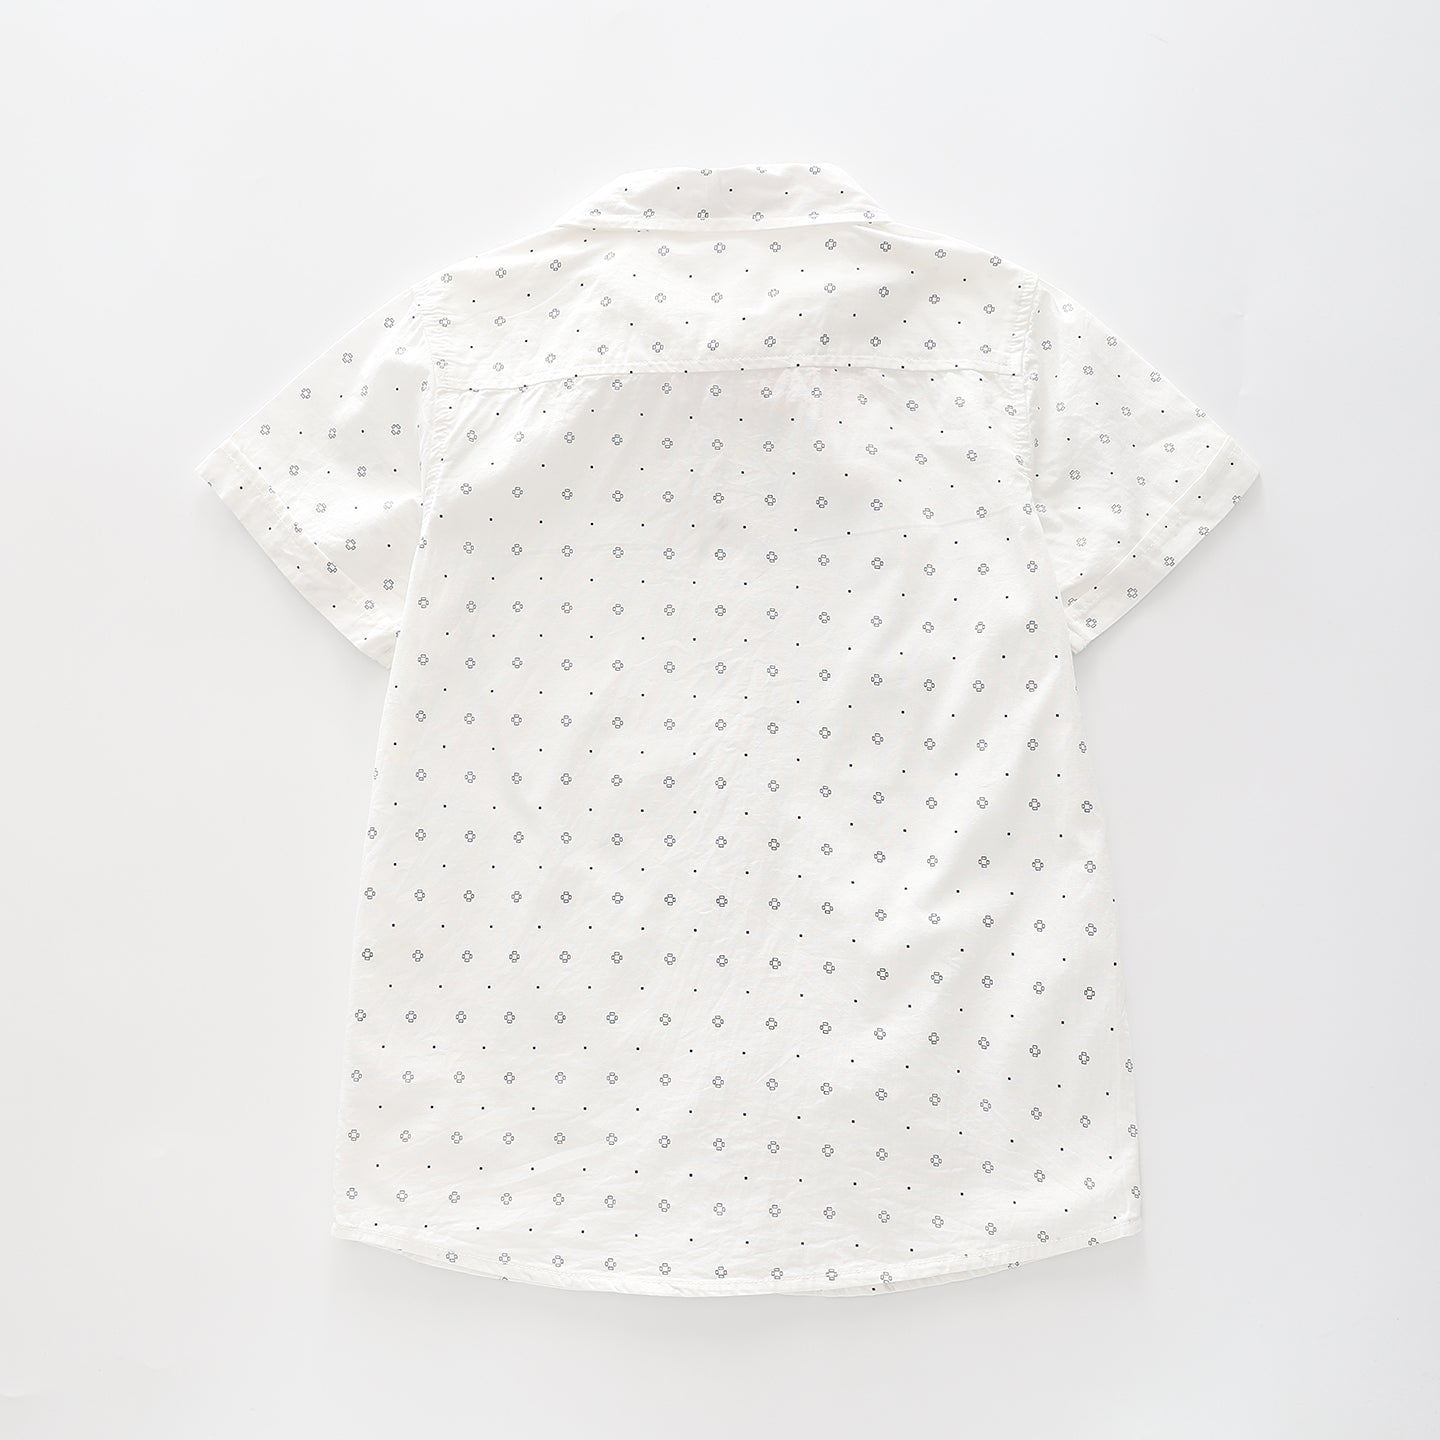 Boy's White Button-down Shirt With geometric Print